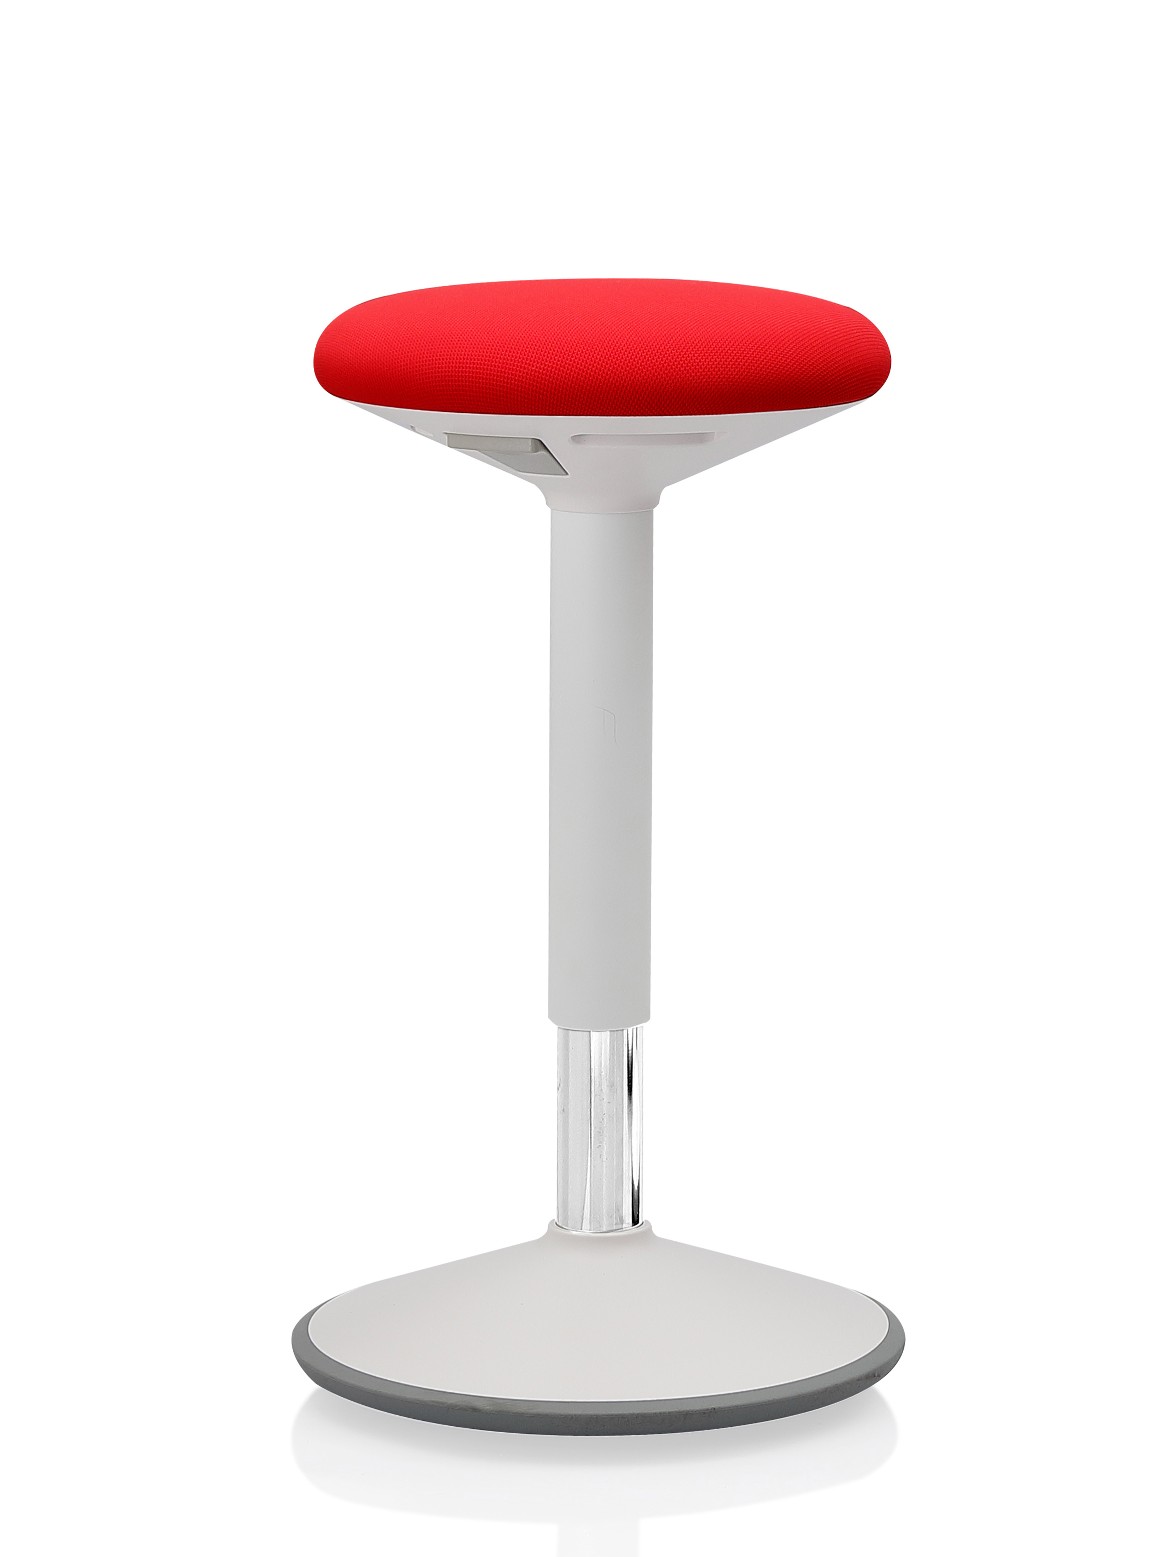 Wobble Stool By Navodesk, Ergonomic Stool, Active Chair, Standing desk stool